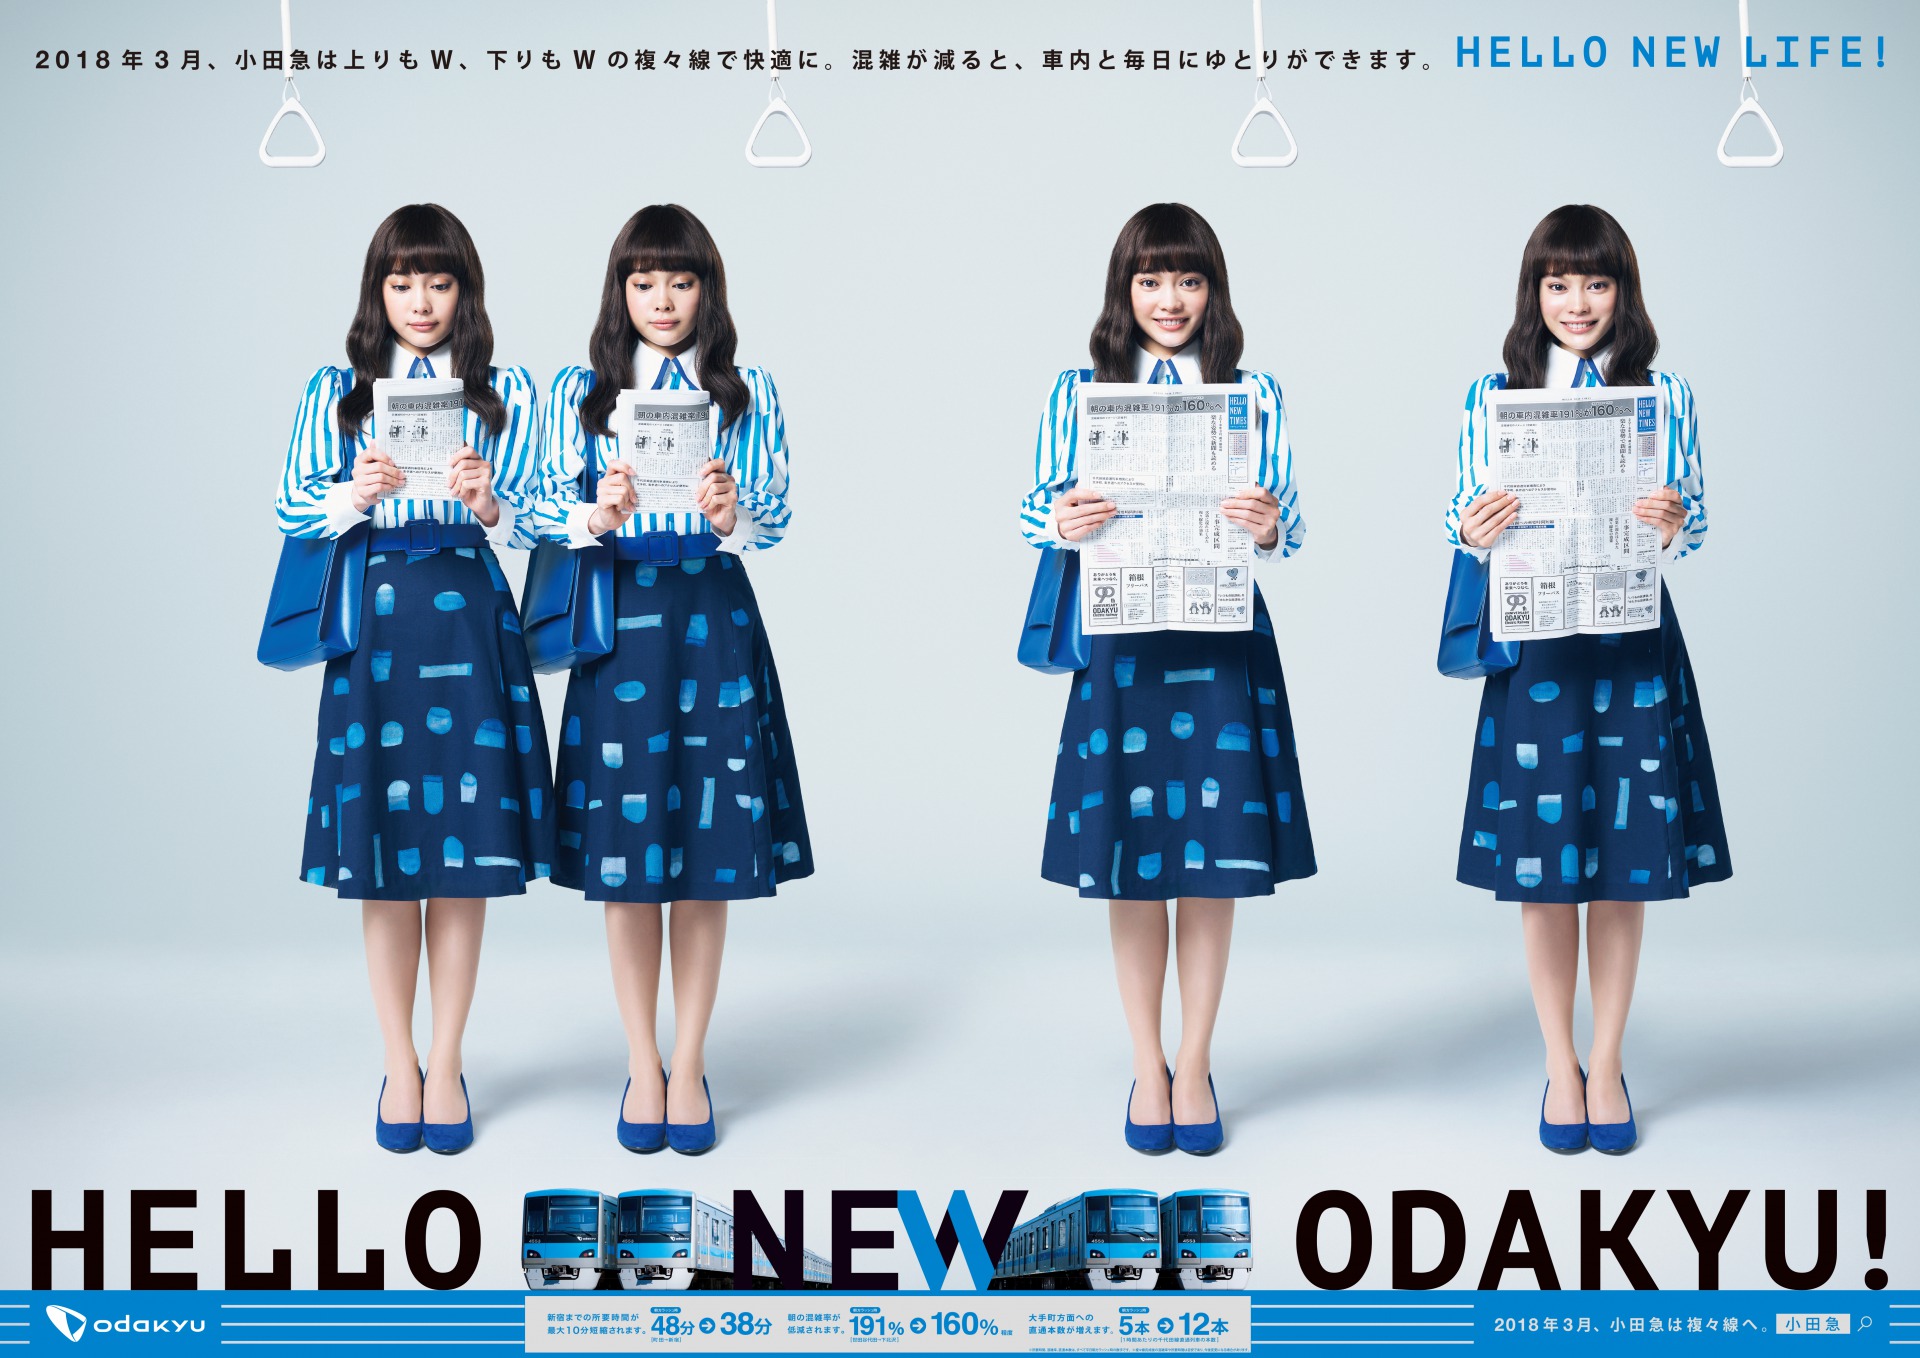 Hello New Odakyu 第２弾 快適になる 篇 ポスター 動画を２０１７年５月２２日 月 から順次公開 小田急 電鉄株式会社のプレスリリース